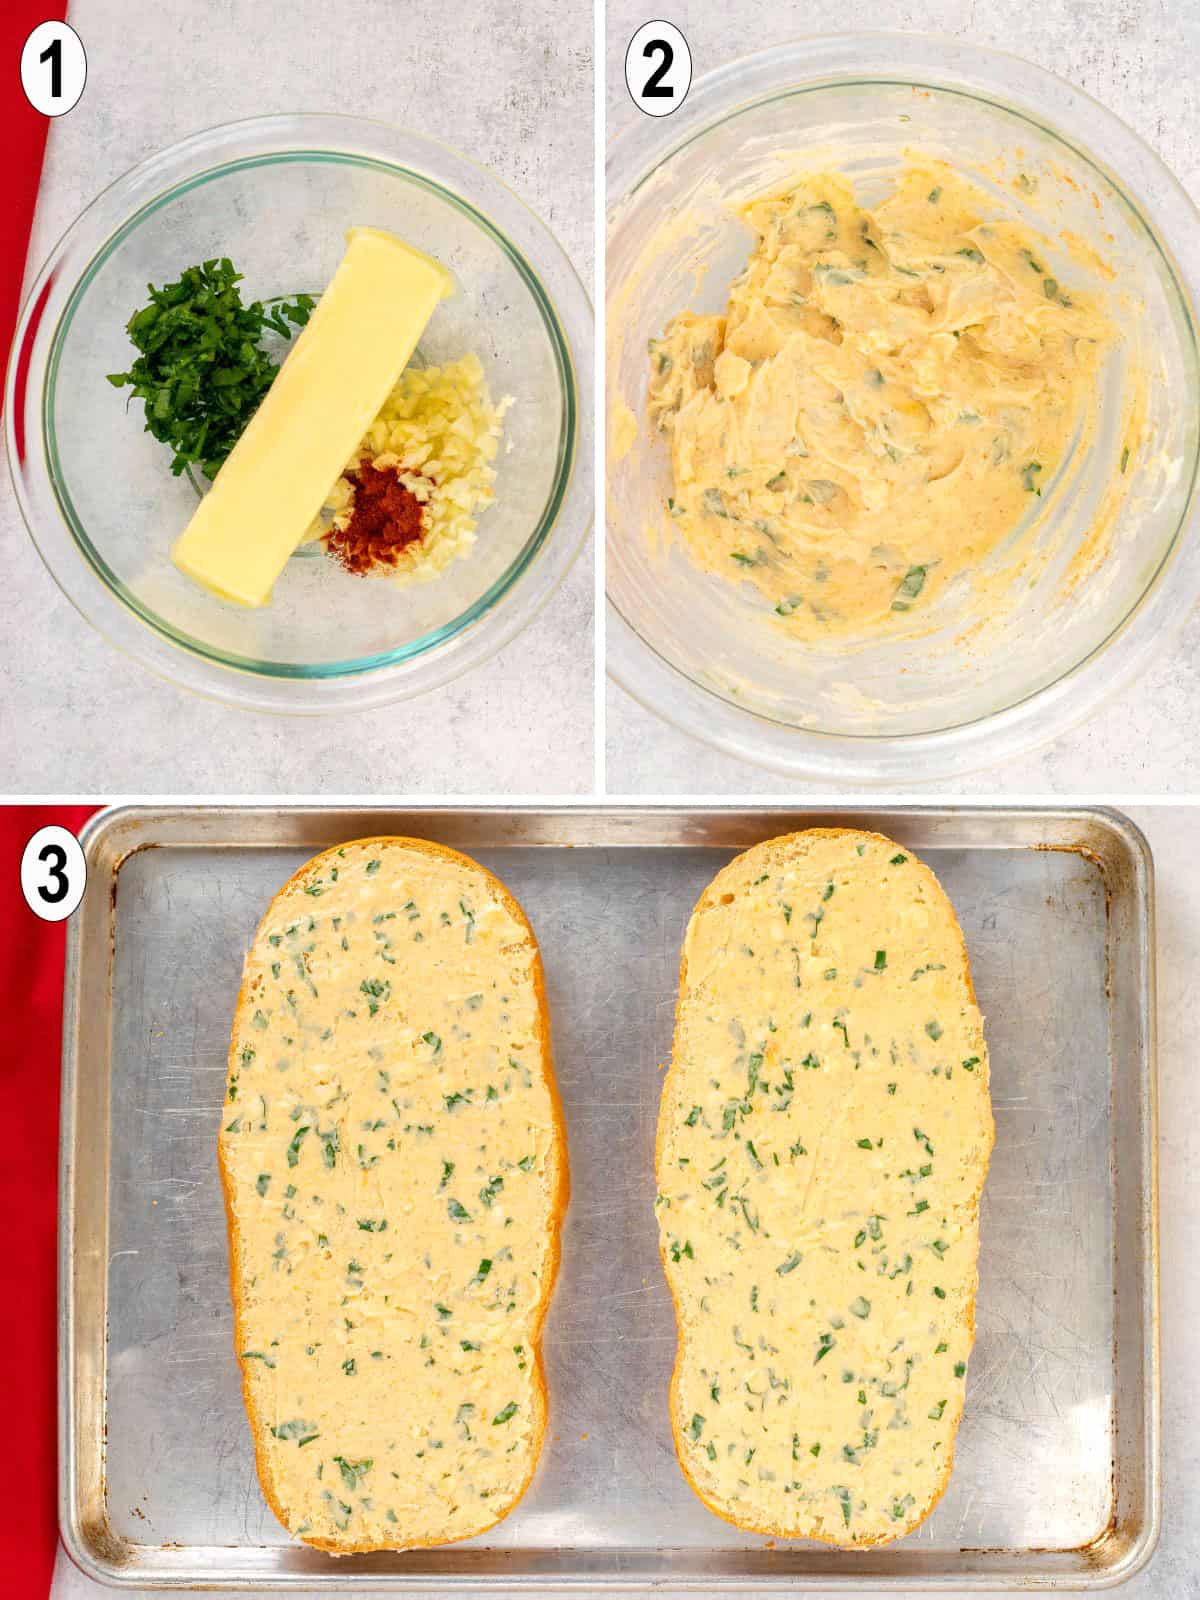 butter mixture prepared and spread on italian bread